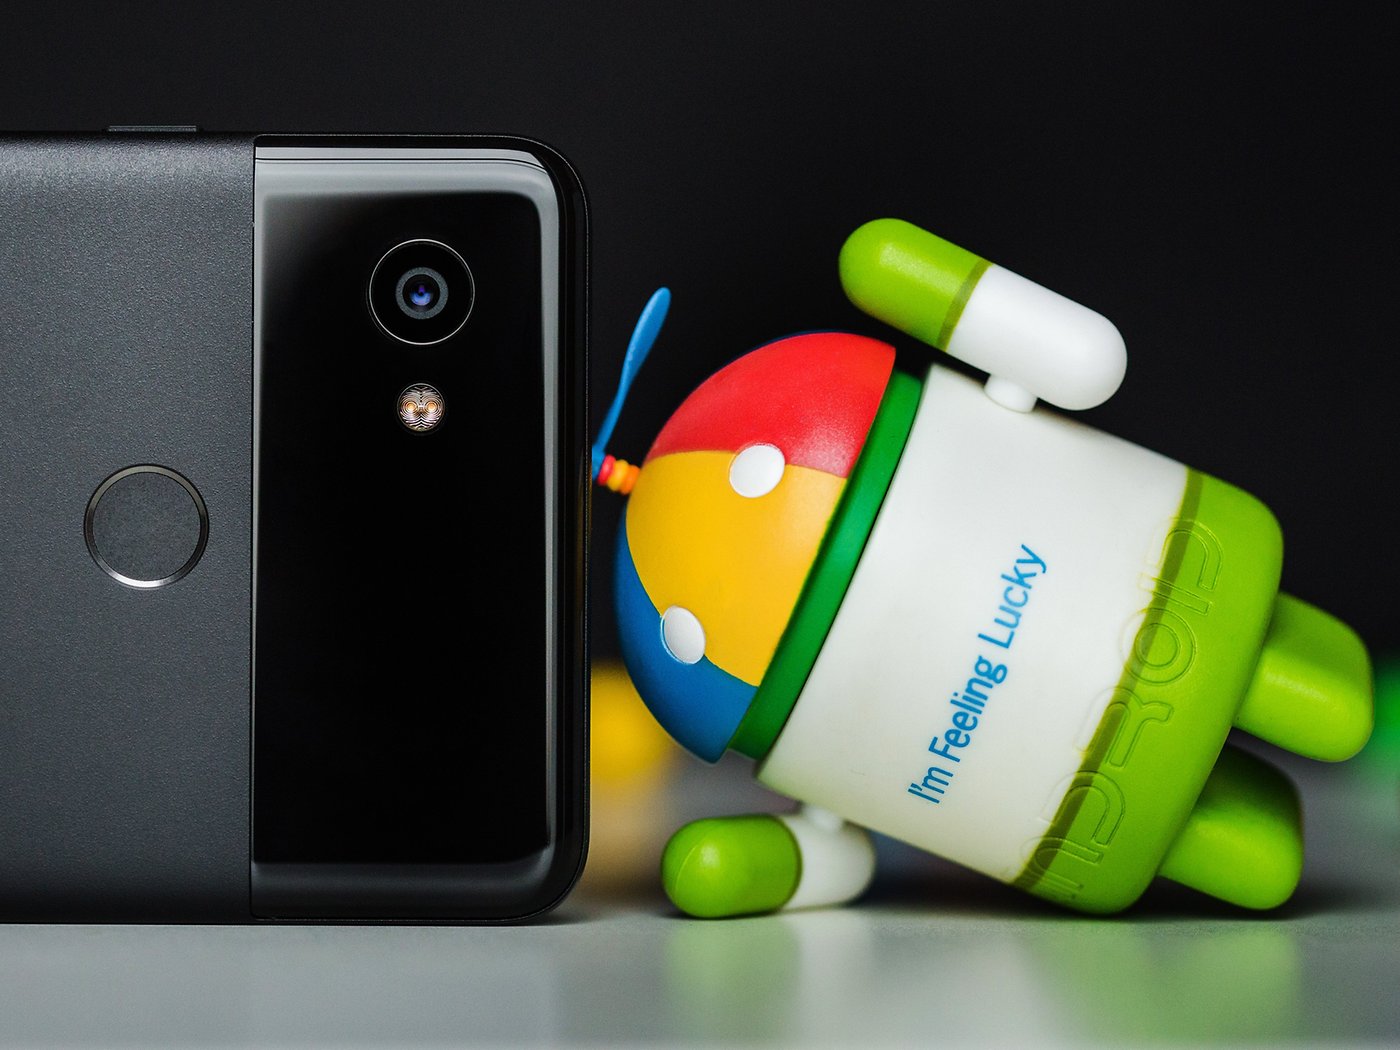 Google Pixel 2 XL review - the definitive Google phone